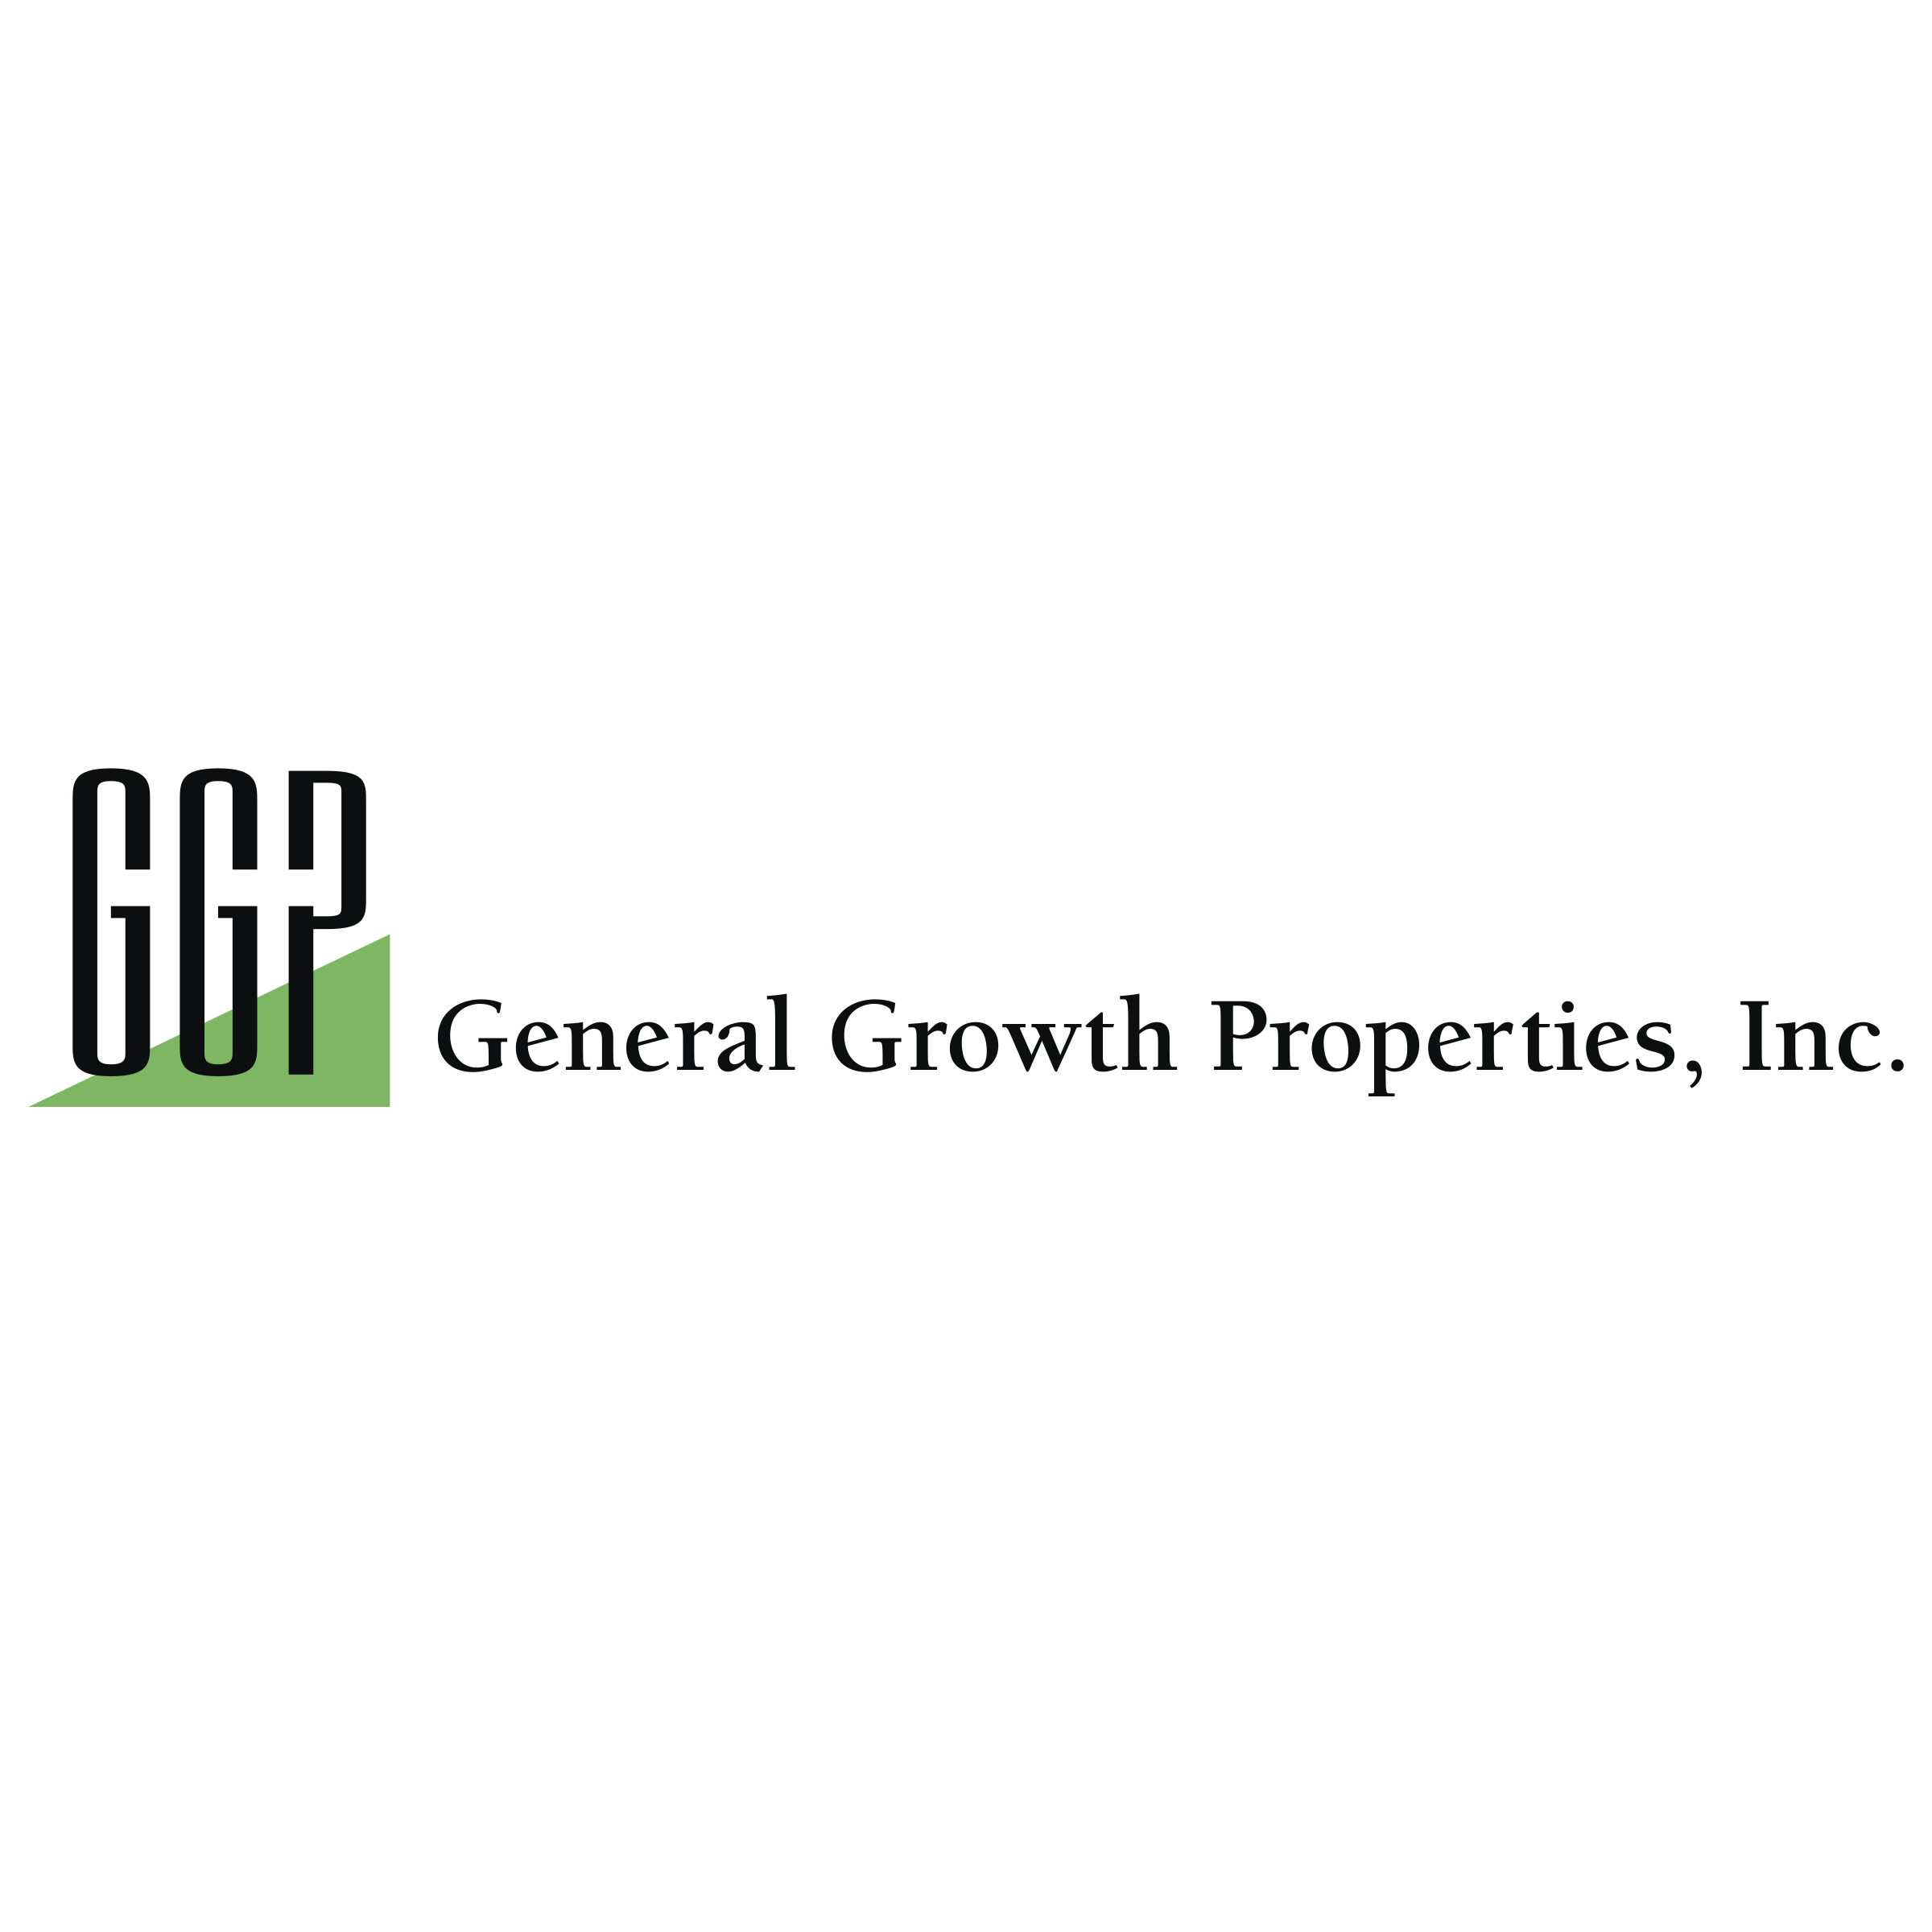 GGP Logo - GGP Logo PNG Transparent & SVG Vector - Freebie Supply